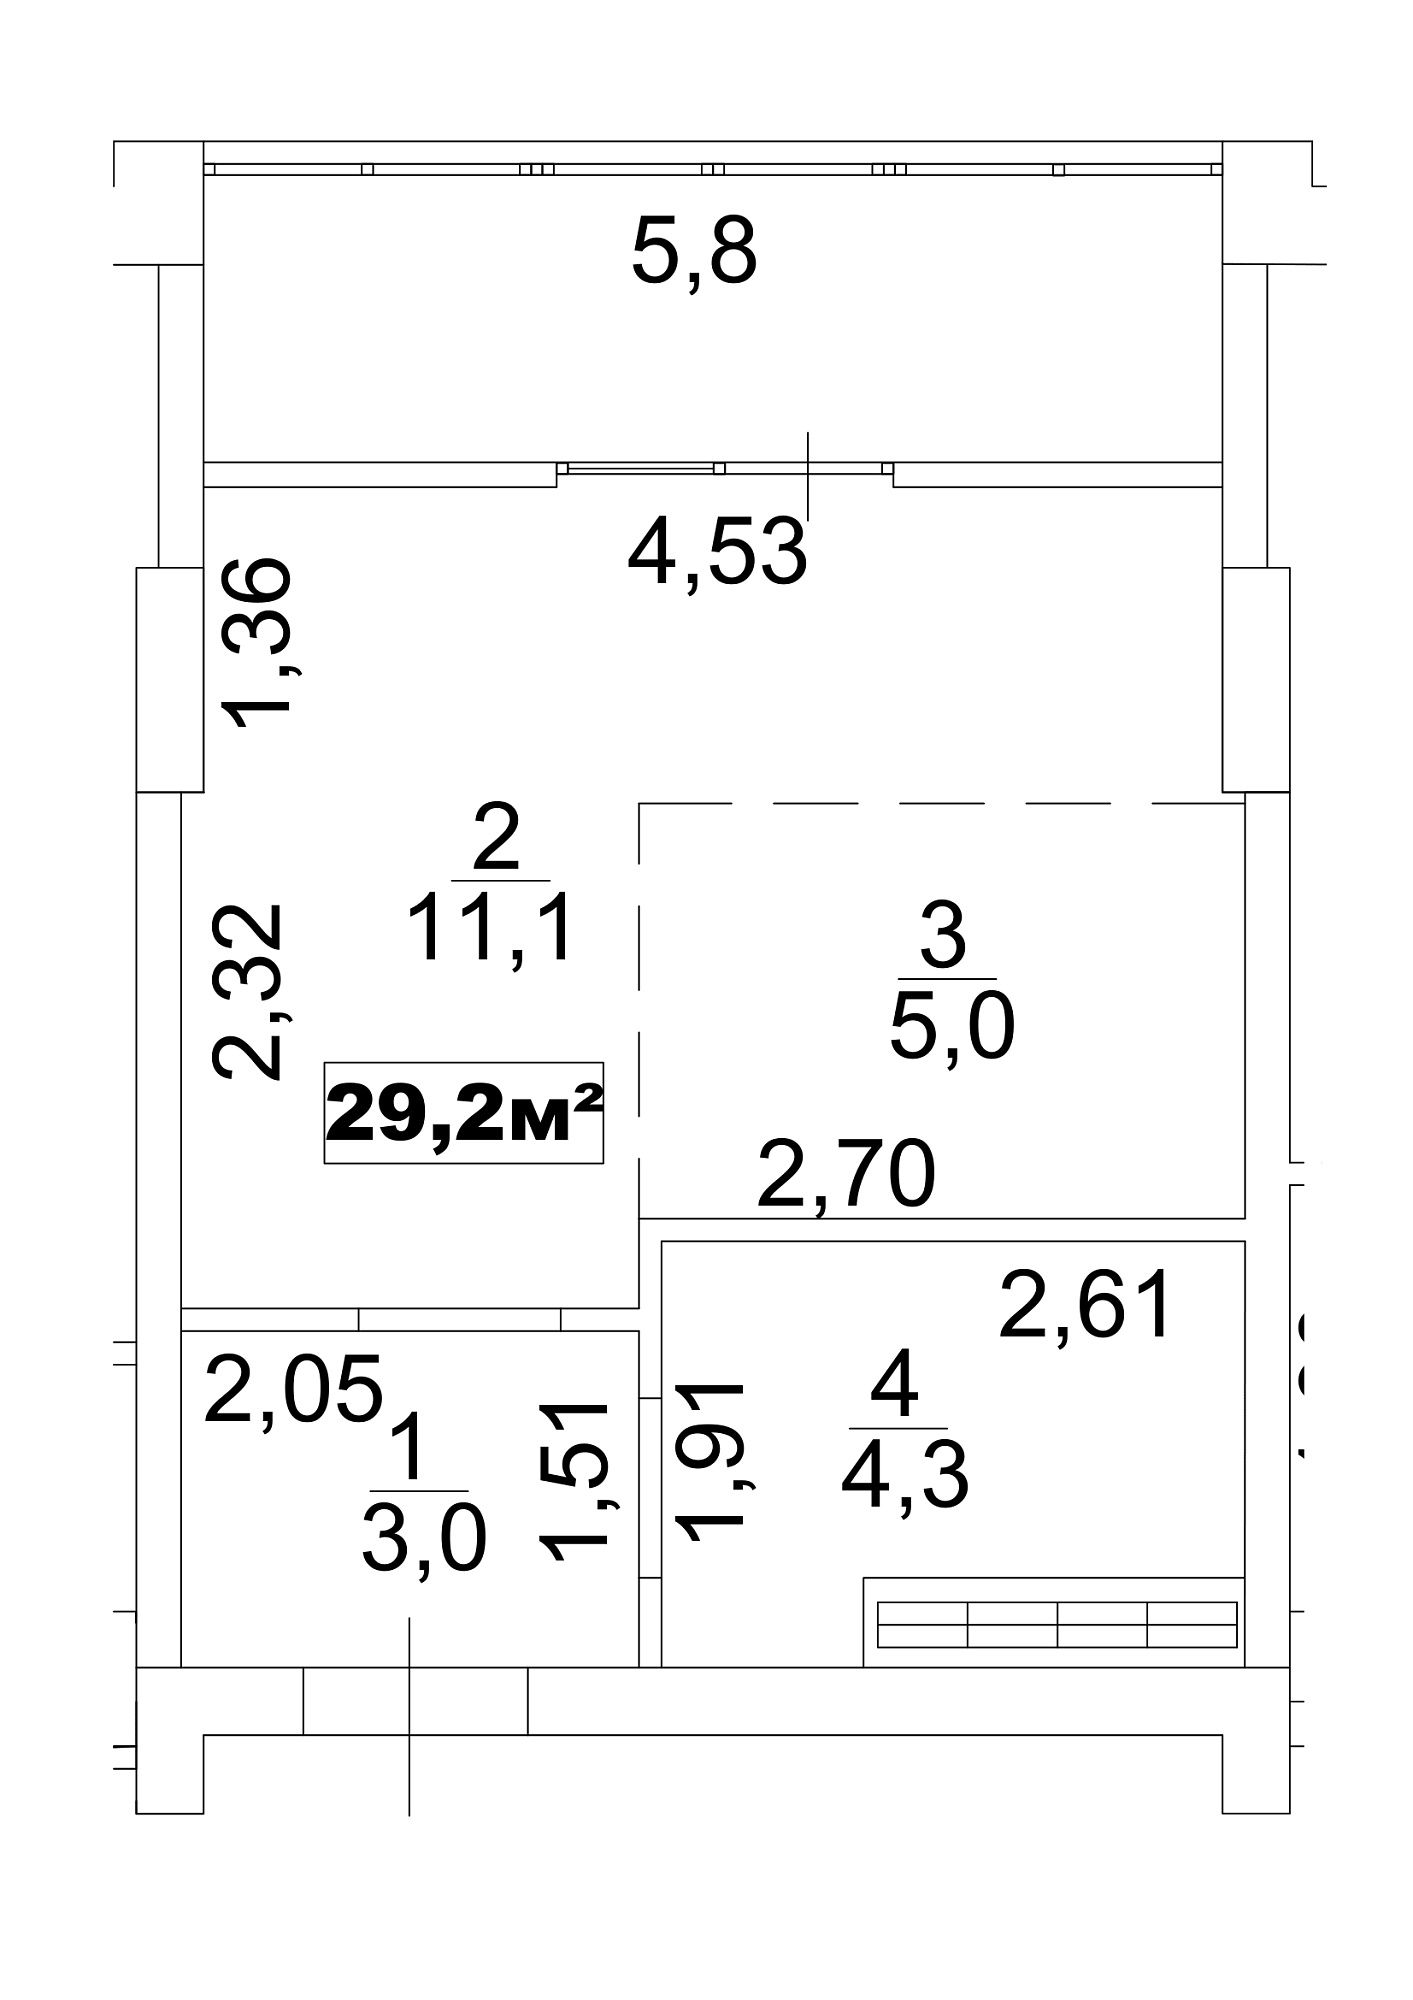 Planning Smart flats area 29.2m2, AB-13-06/00047.